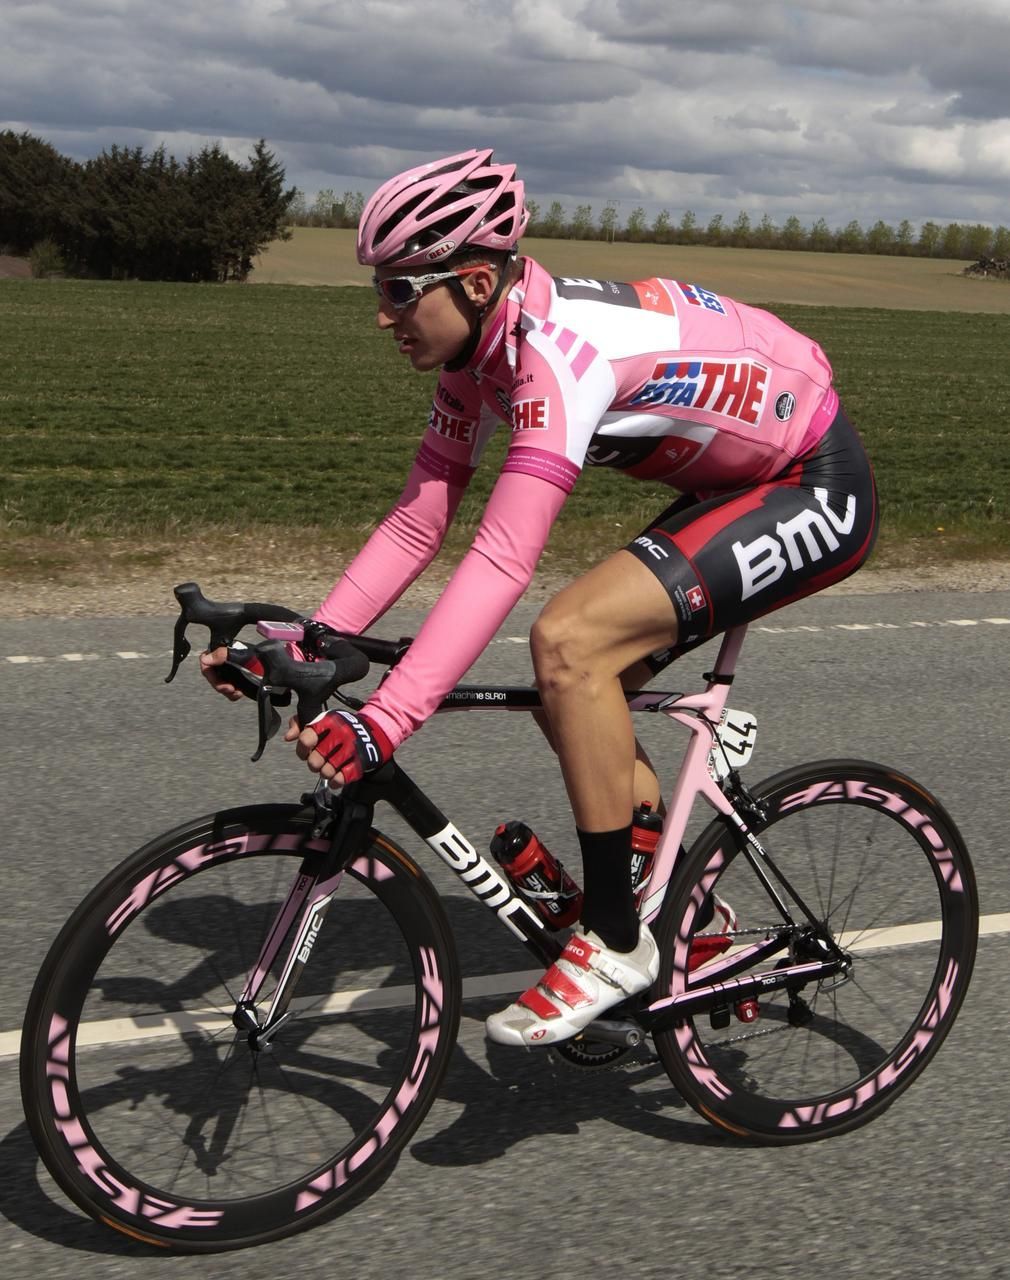 Giro d'Italia: Taylor Phinney